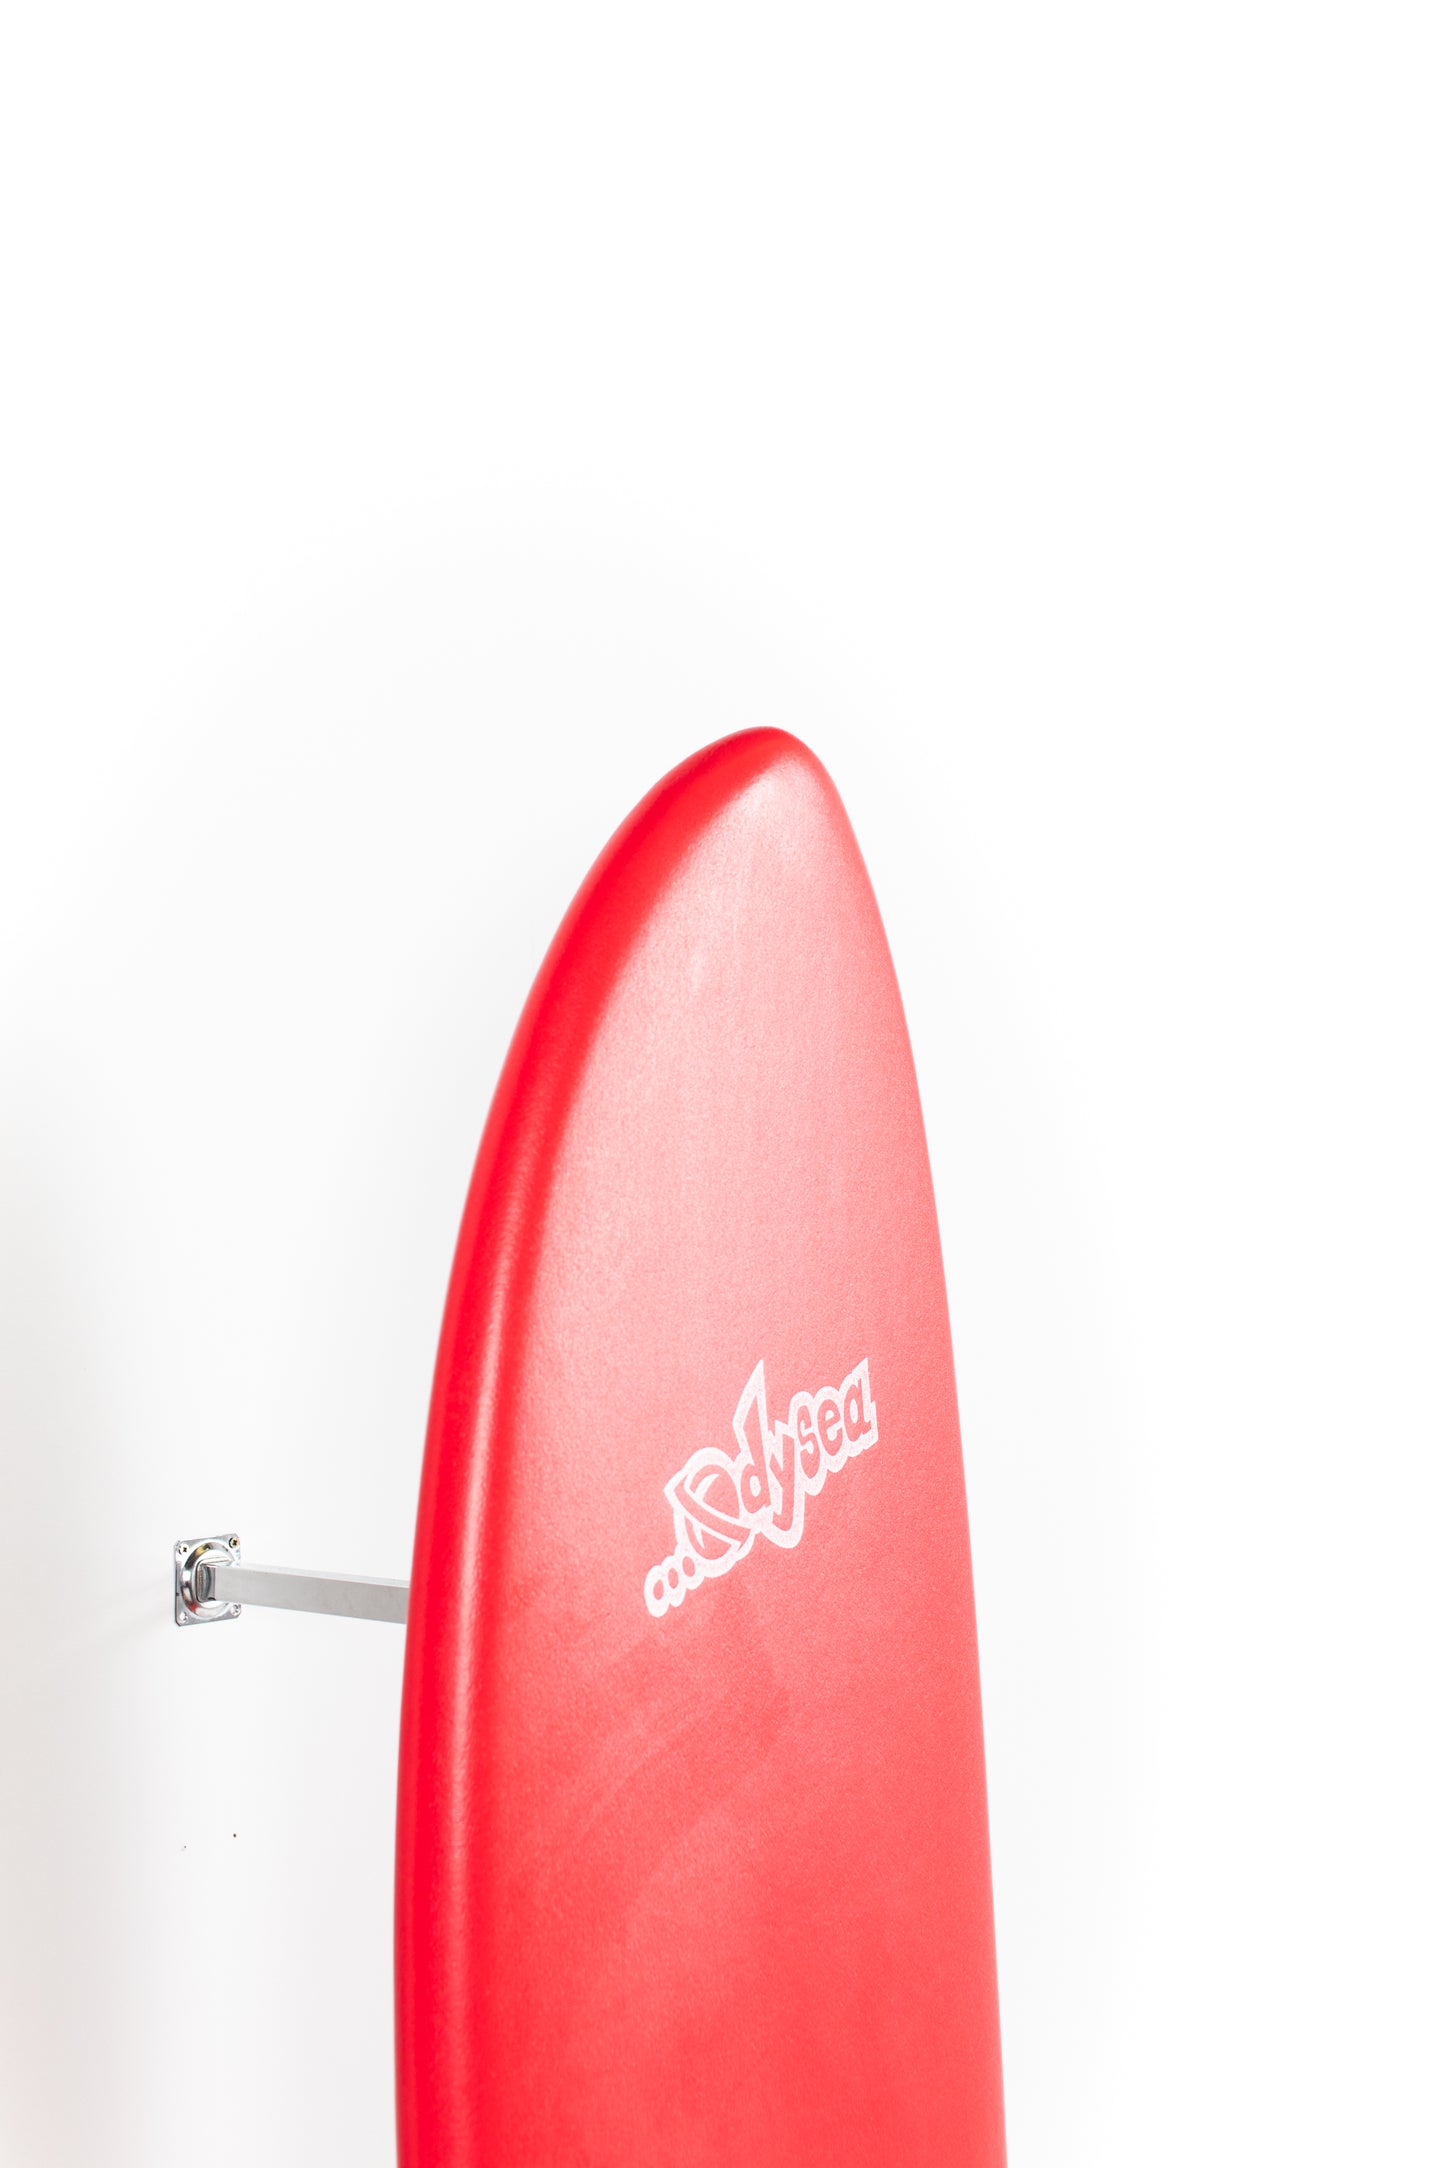 
                  
                    Pukas-Surf-Shop-Catch-Surfboards-Odysea-Log
                  
                